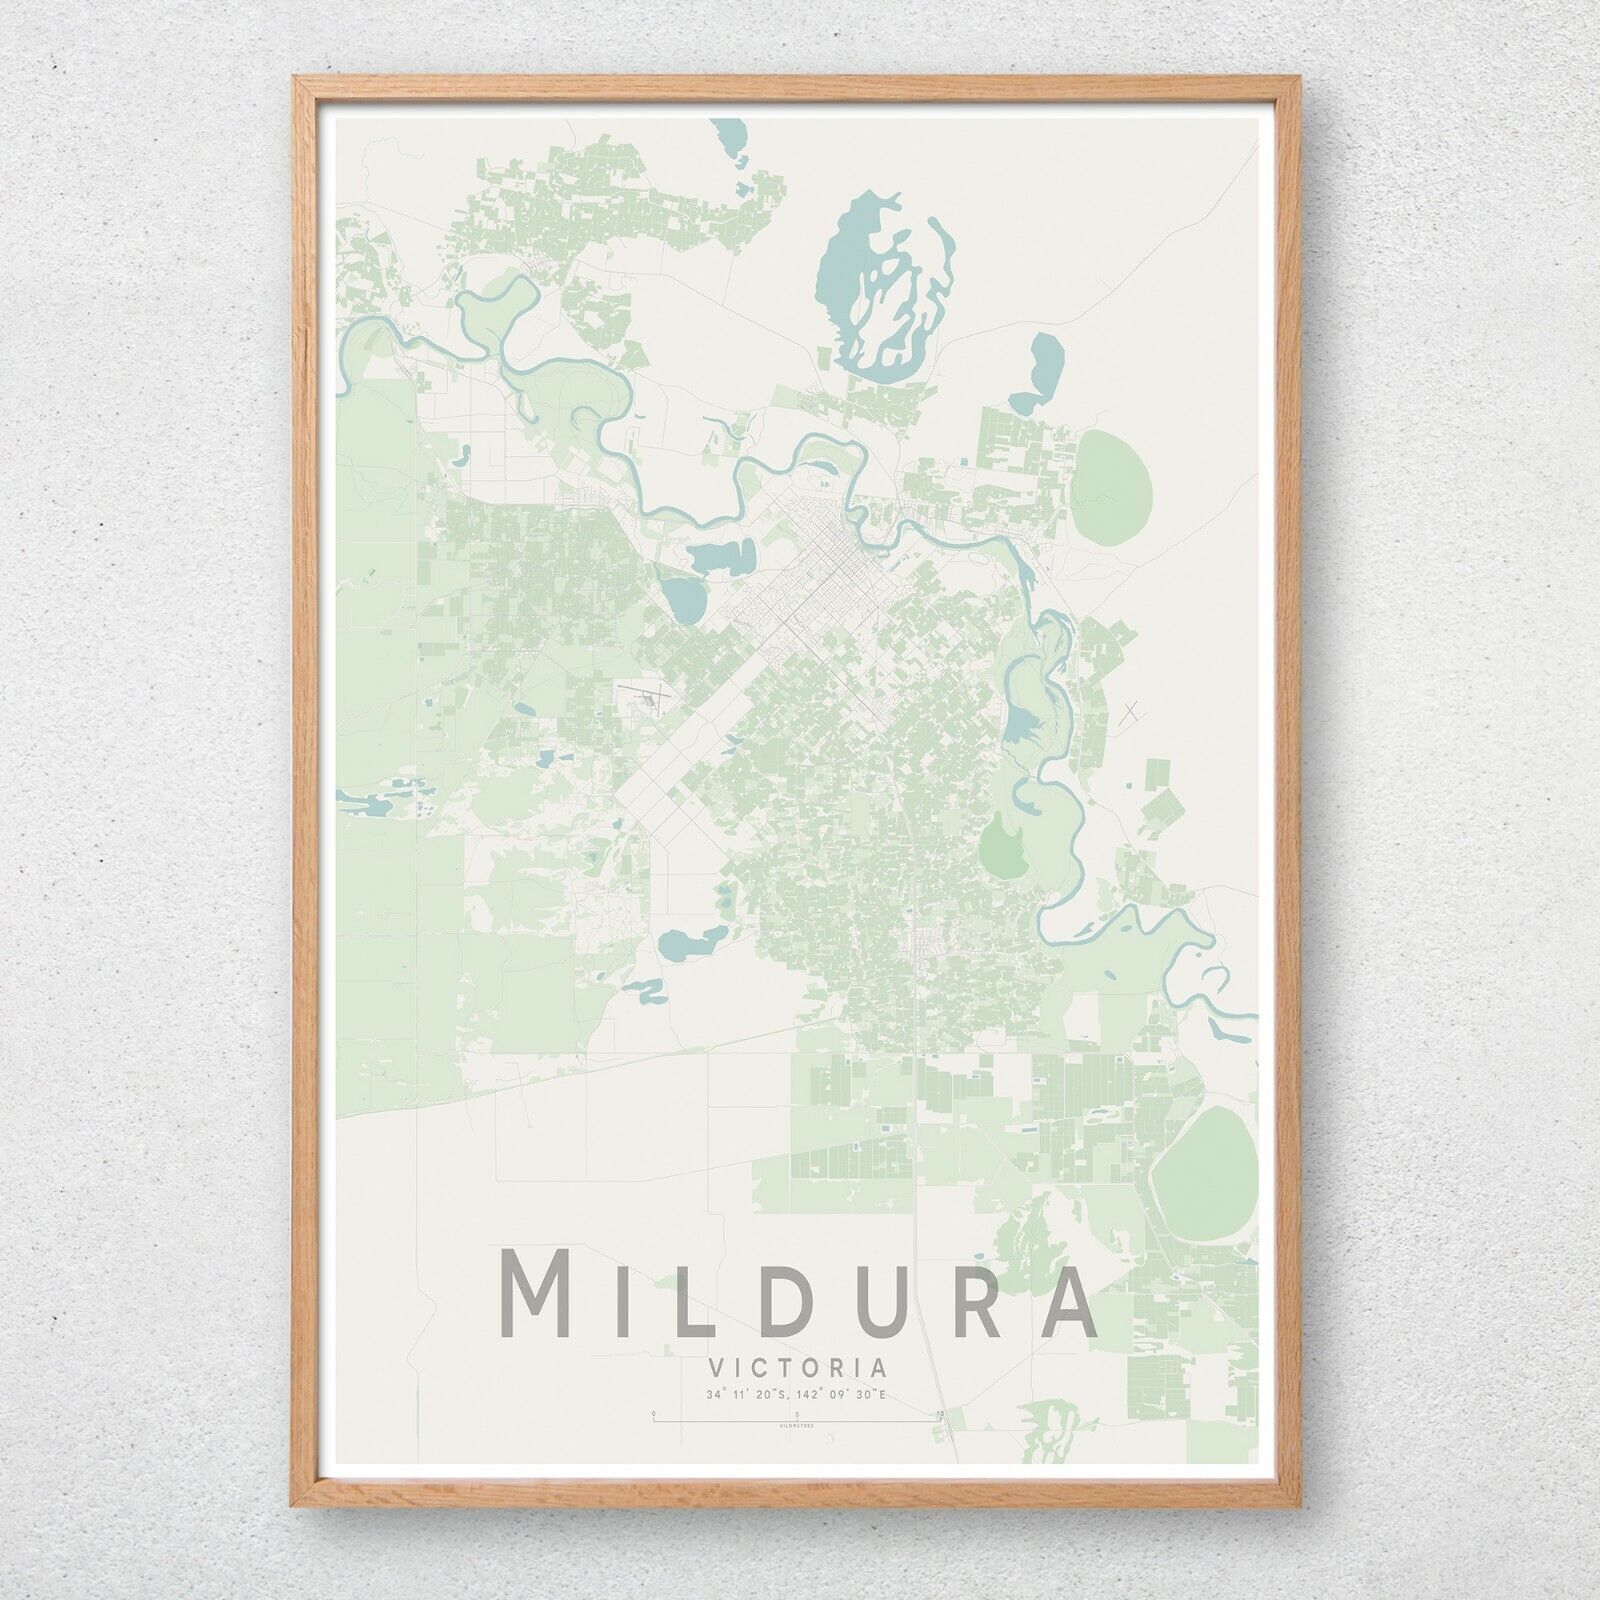 MILDURA Map Print, Australia Wall Art Poster City Map Wall Decor A3 A2 A1